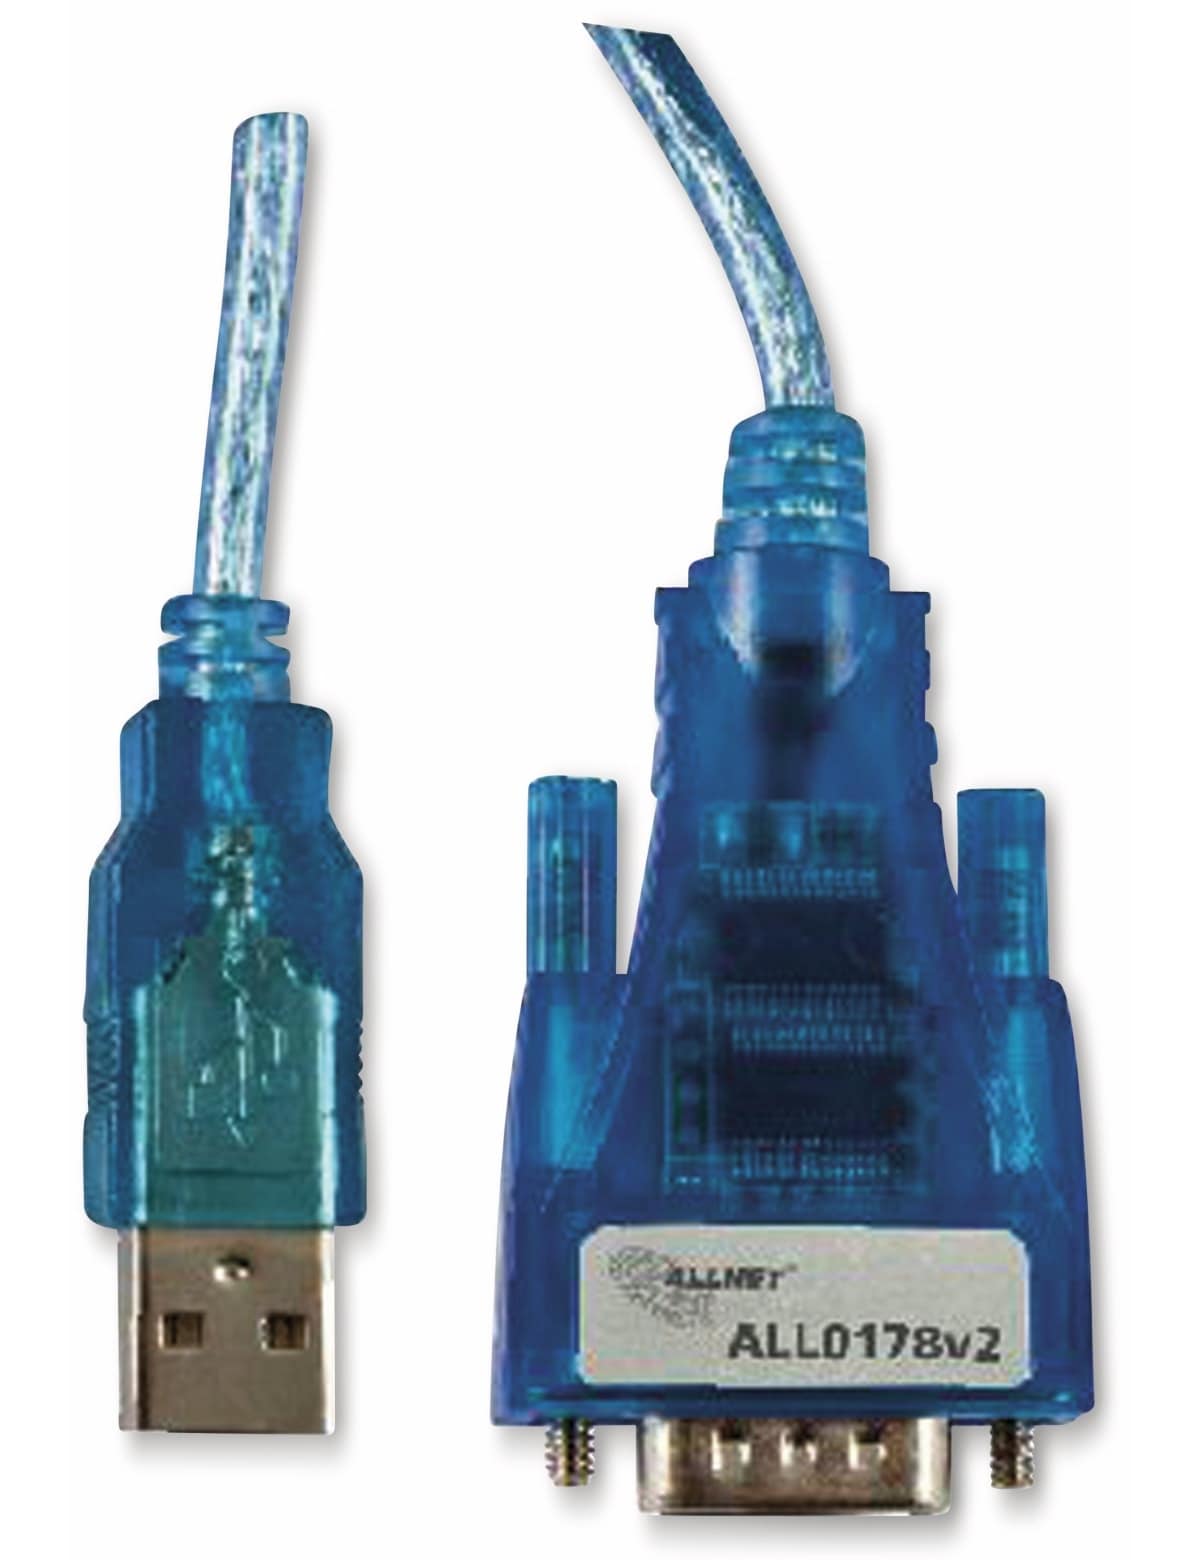 ALLNET USB-Kabel auf Seriell RS422/485, 6 PIN Terminal Block